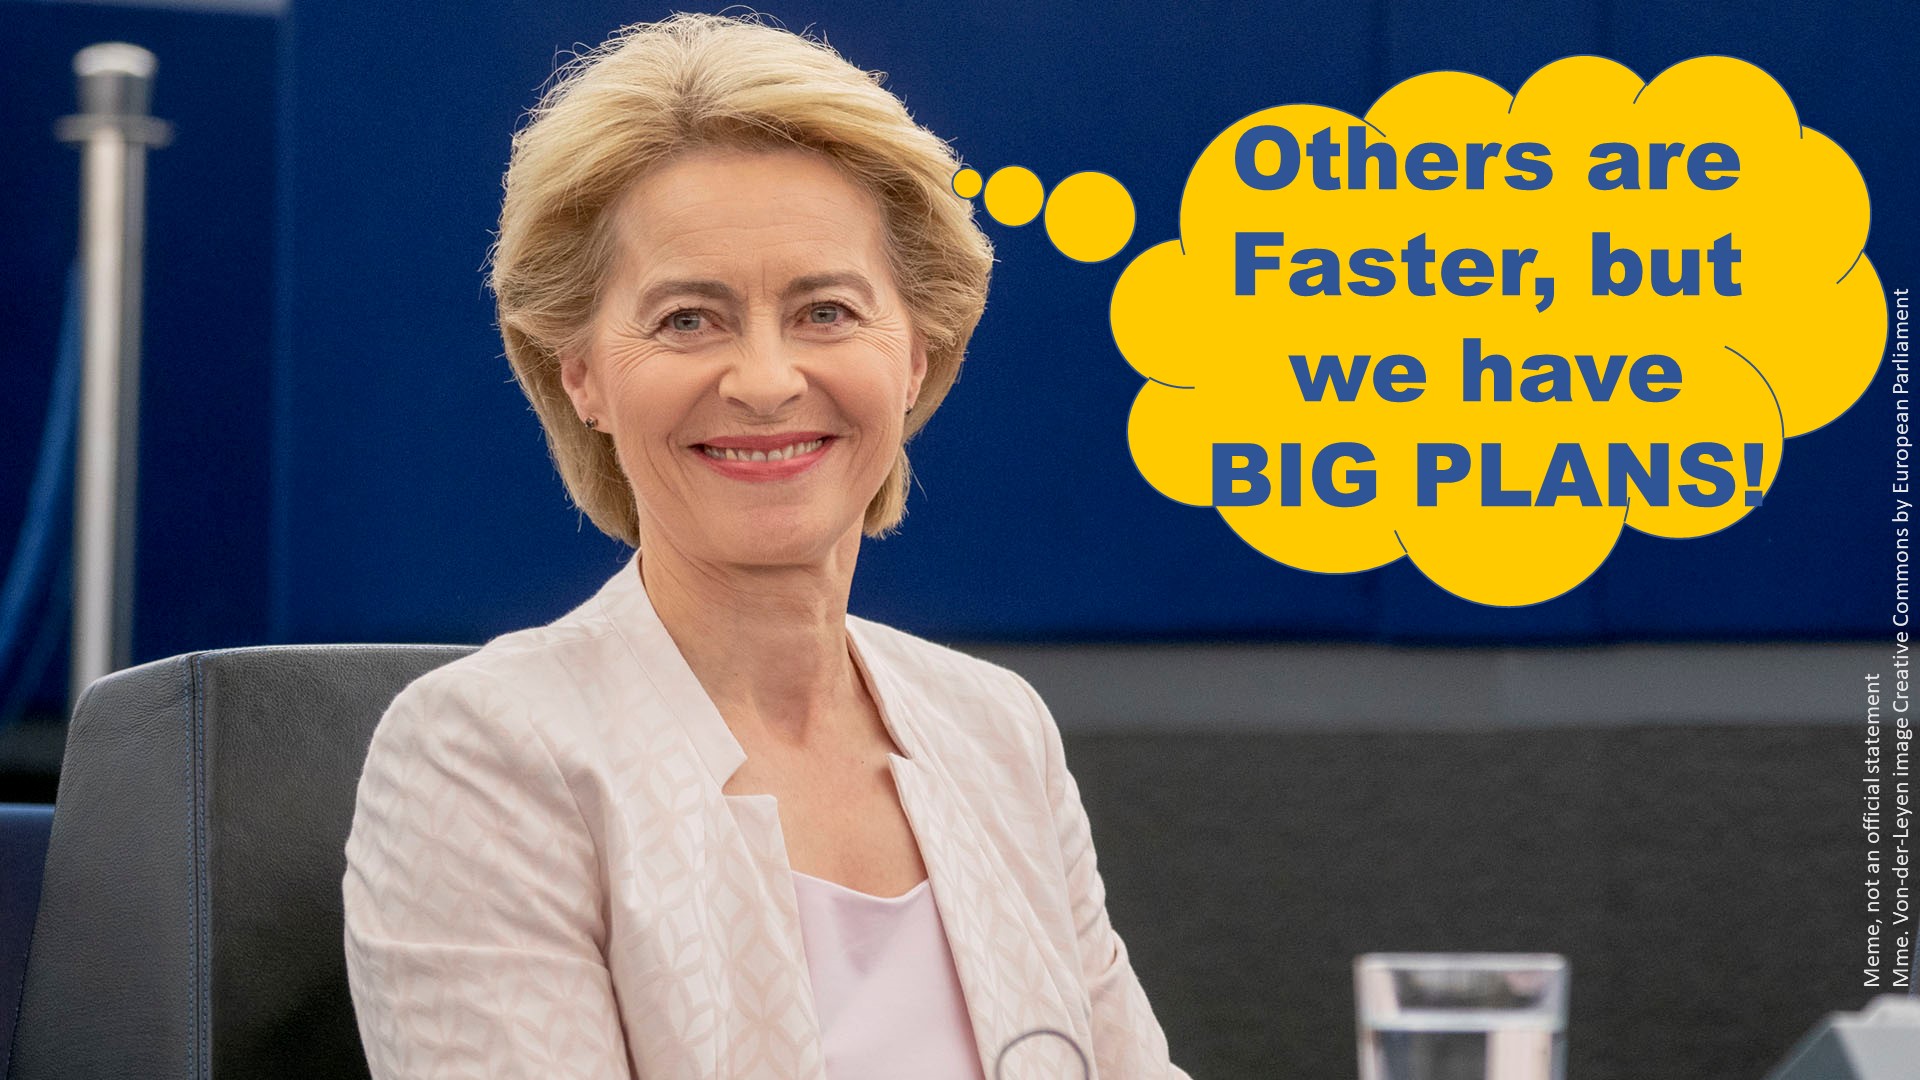 Others are faster. But we have BIG PLANS. Ursula von der Leyen Meme